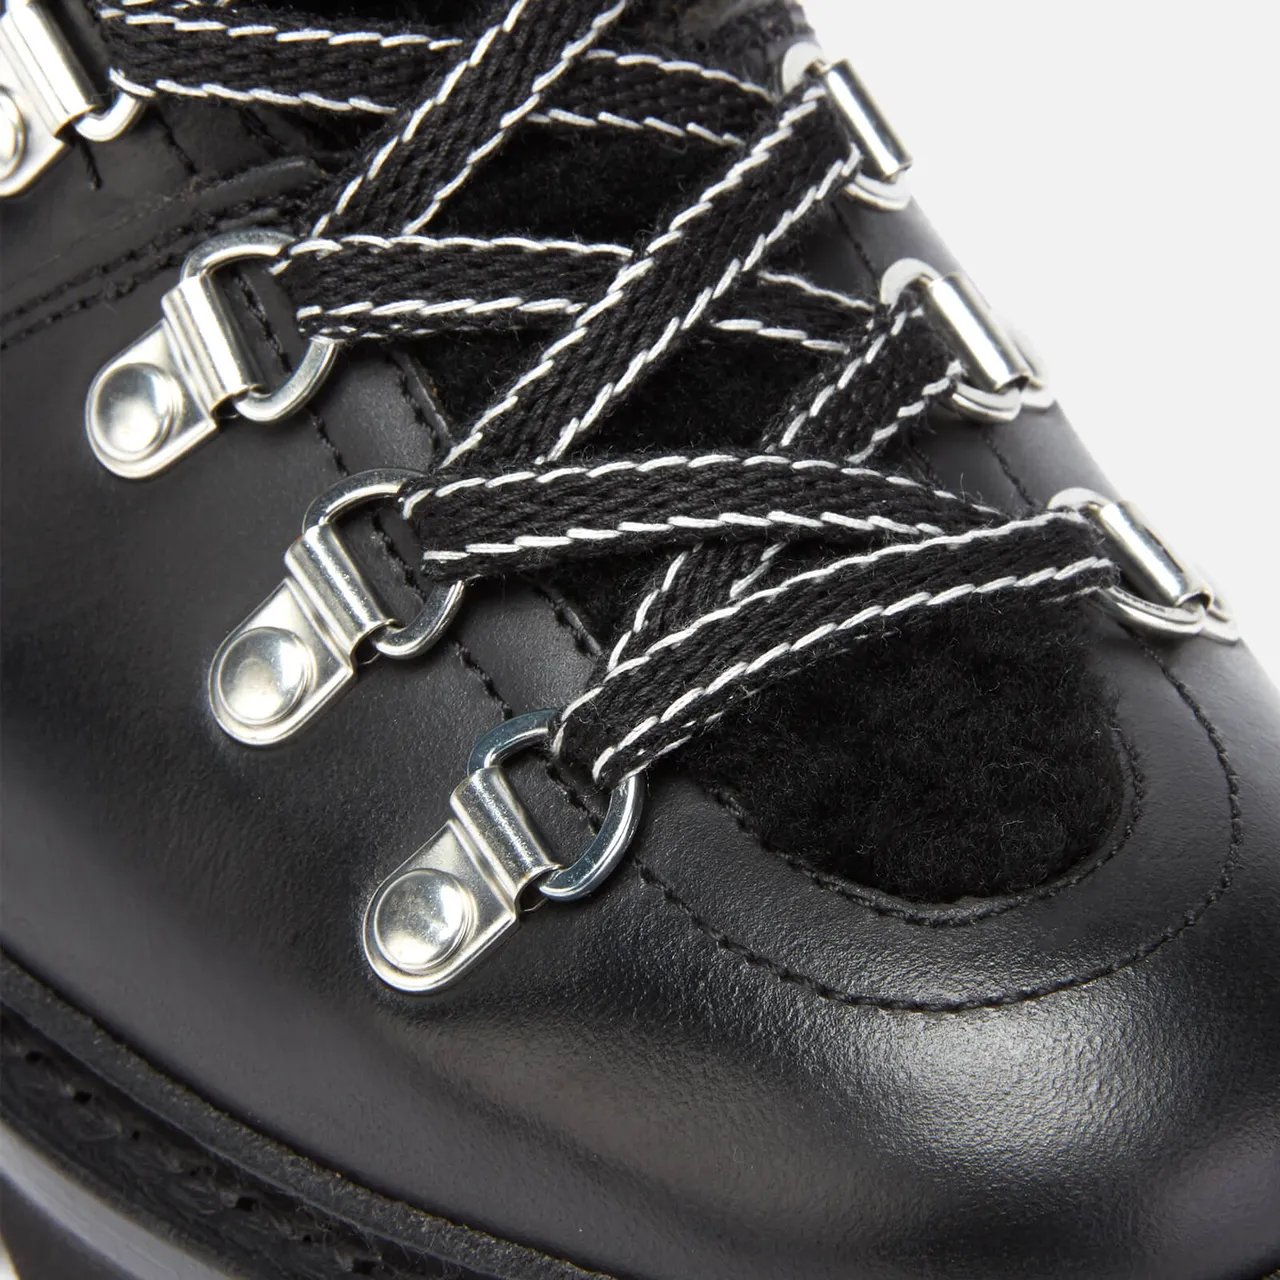 Grenson Women's Nanette Leather/Shearling Hiking Style Boots - Black - UK